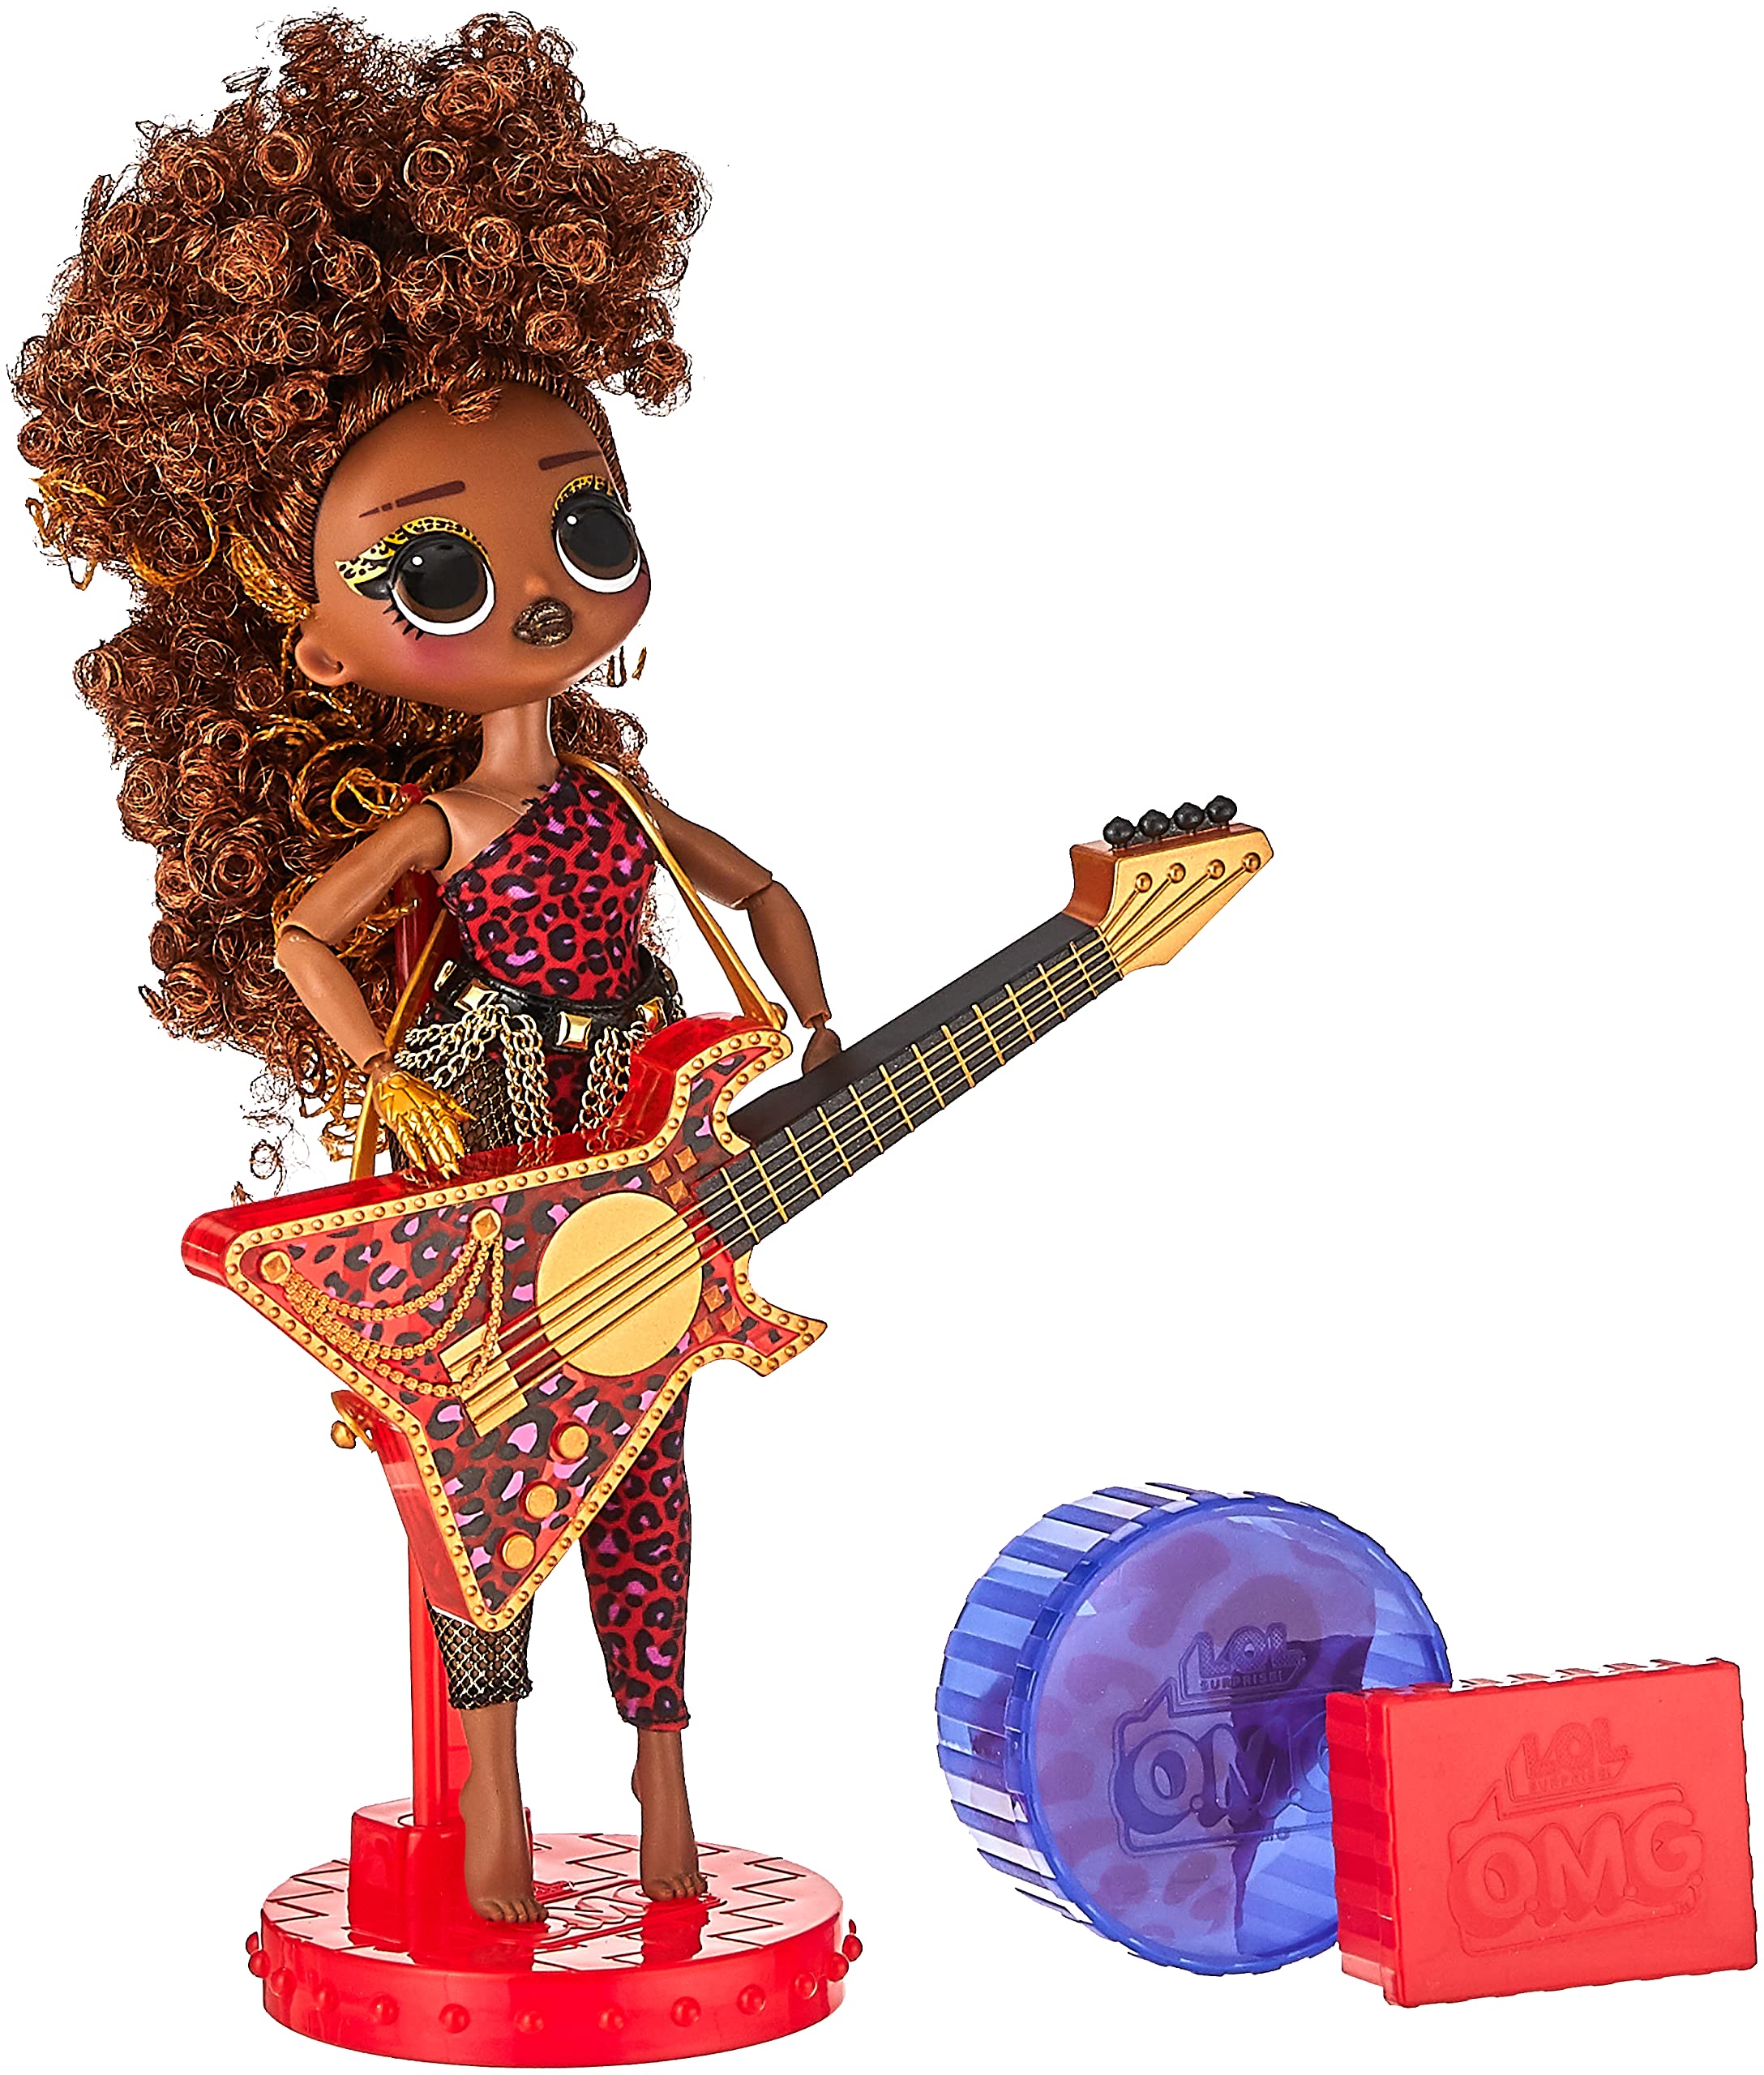 12" LOL Surprise OMG Remix Rock Ferocious Fashion Doll Playset w/ 15 Surprises $12.32 + Free Shipping w/ Prime or on $35+